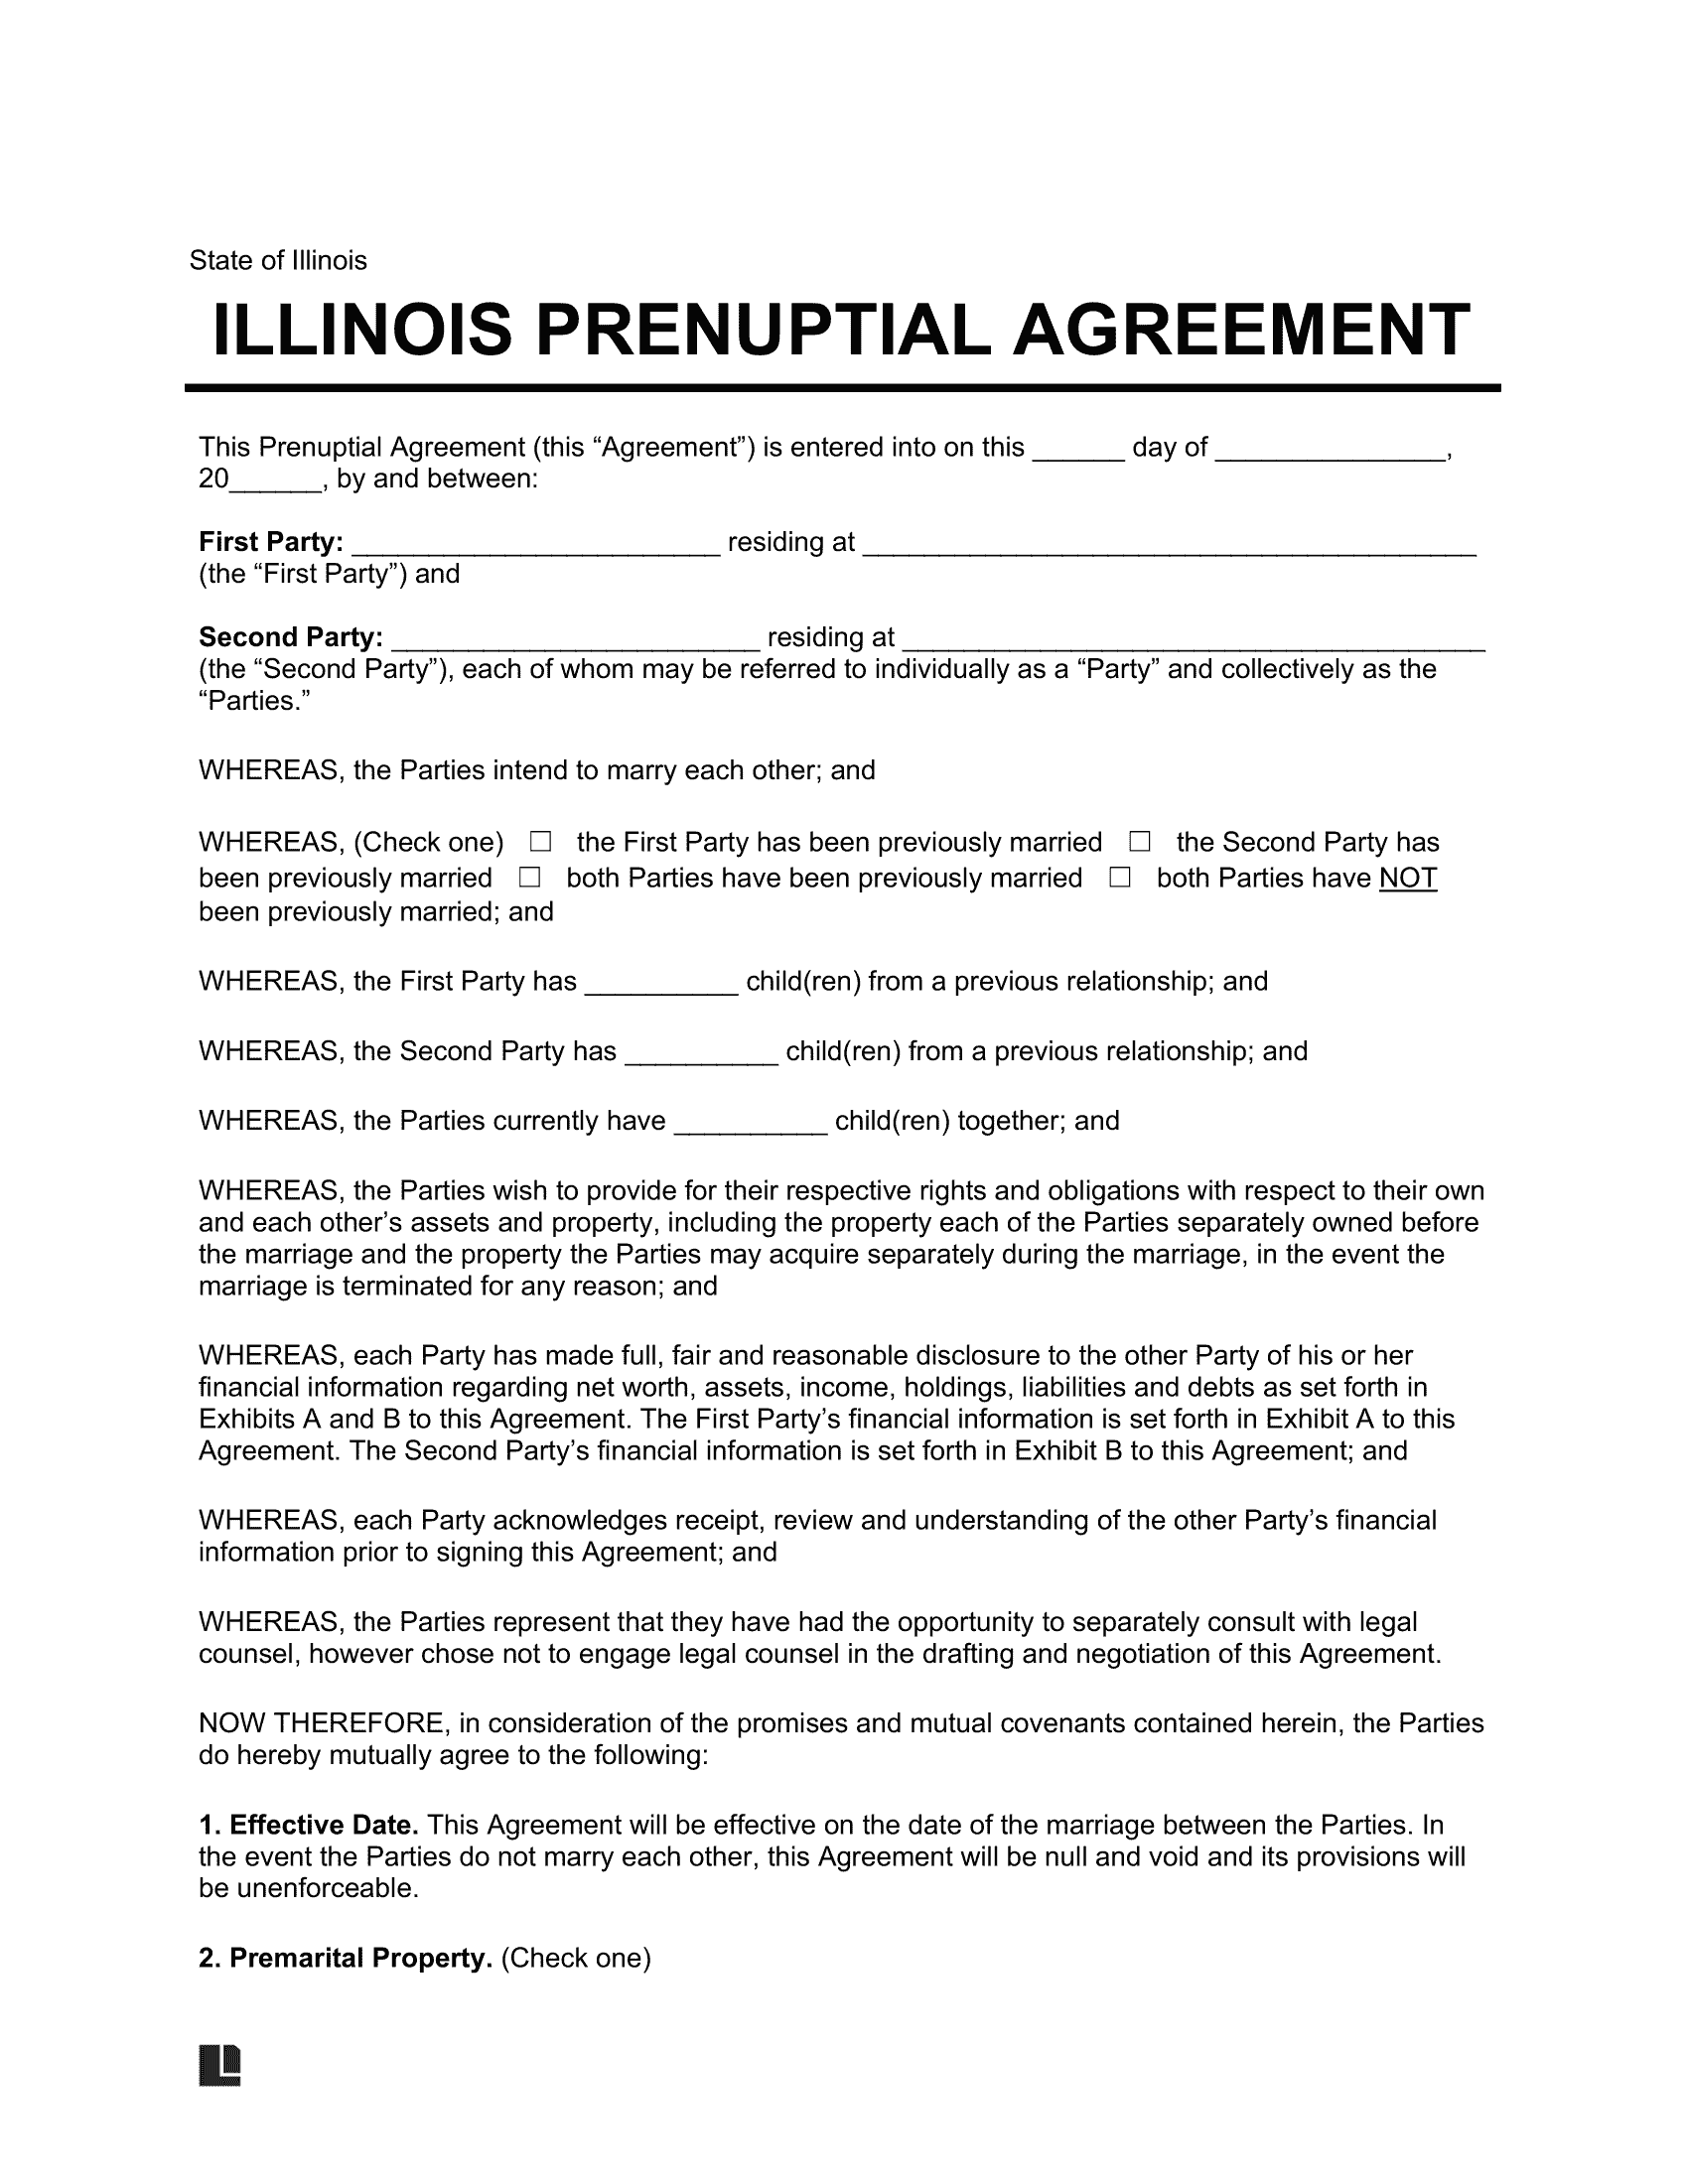 Illinois Prenuptial Agreement Template